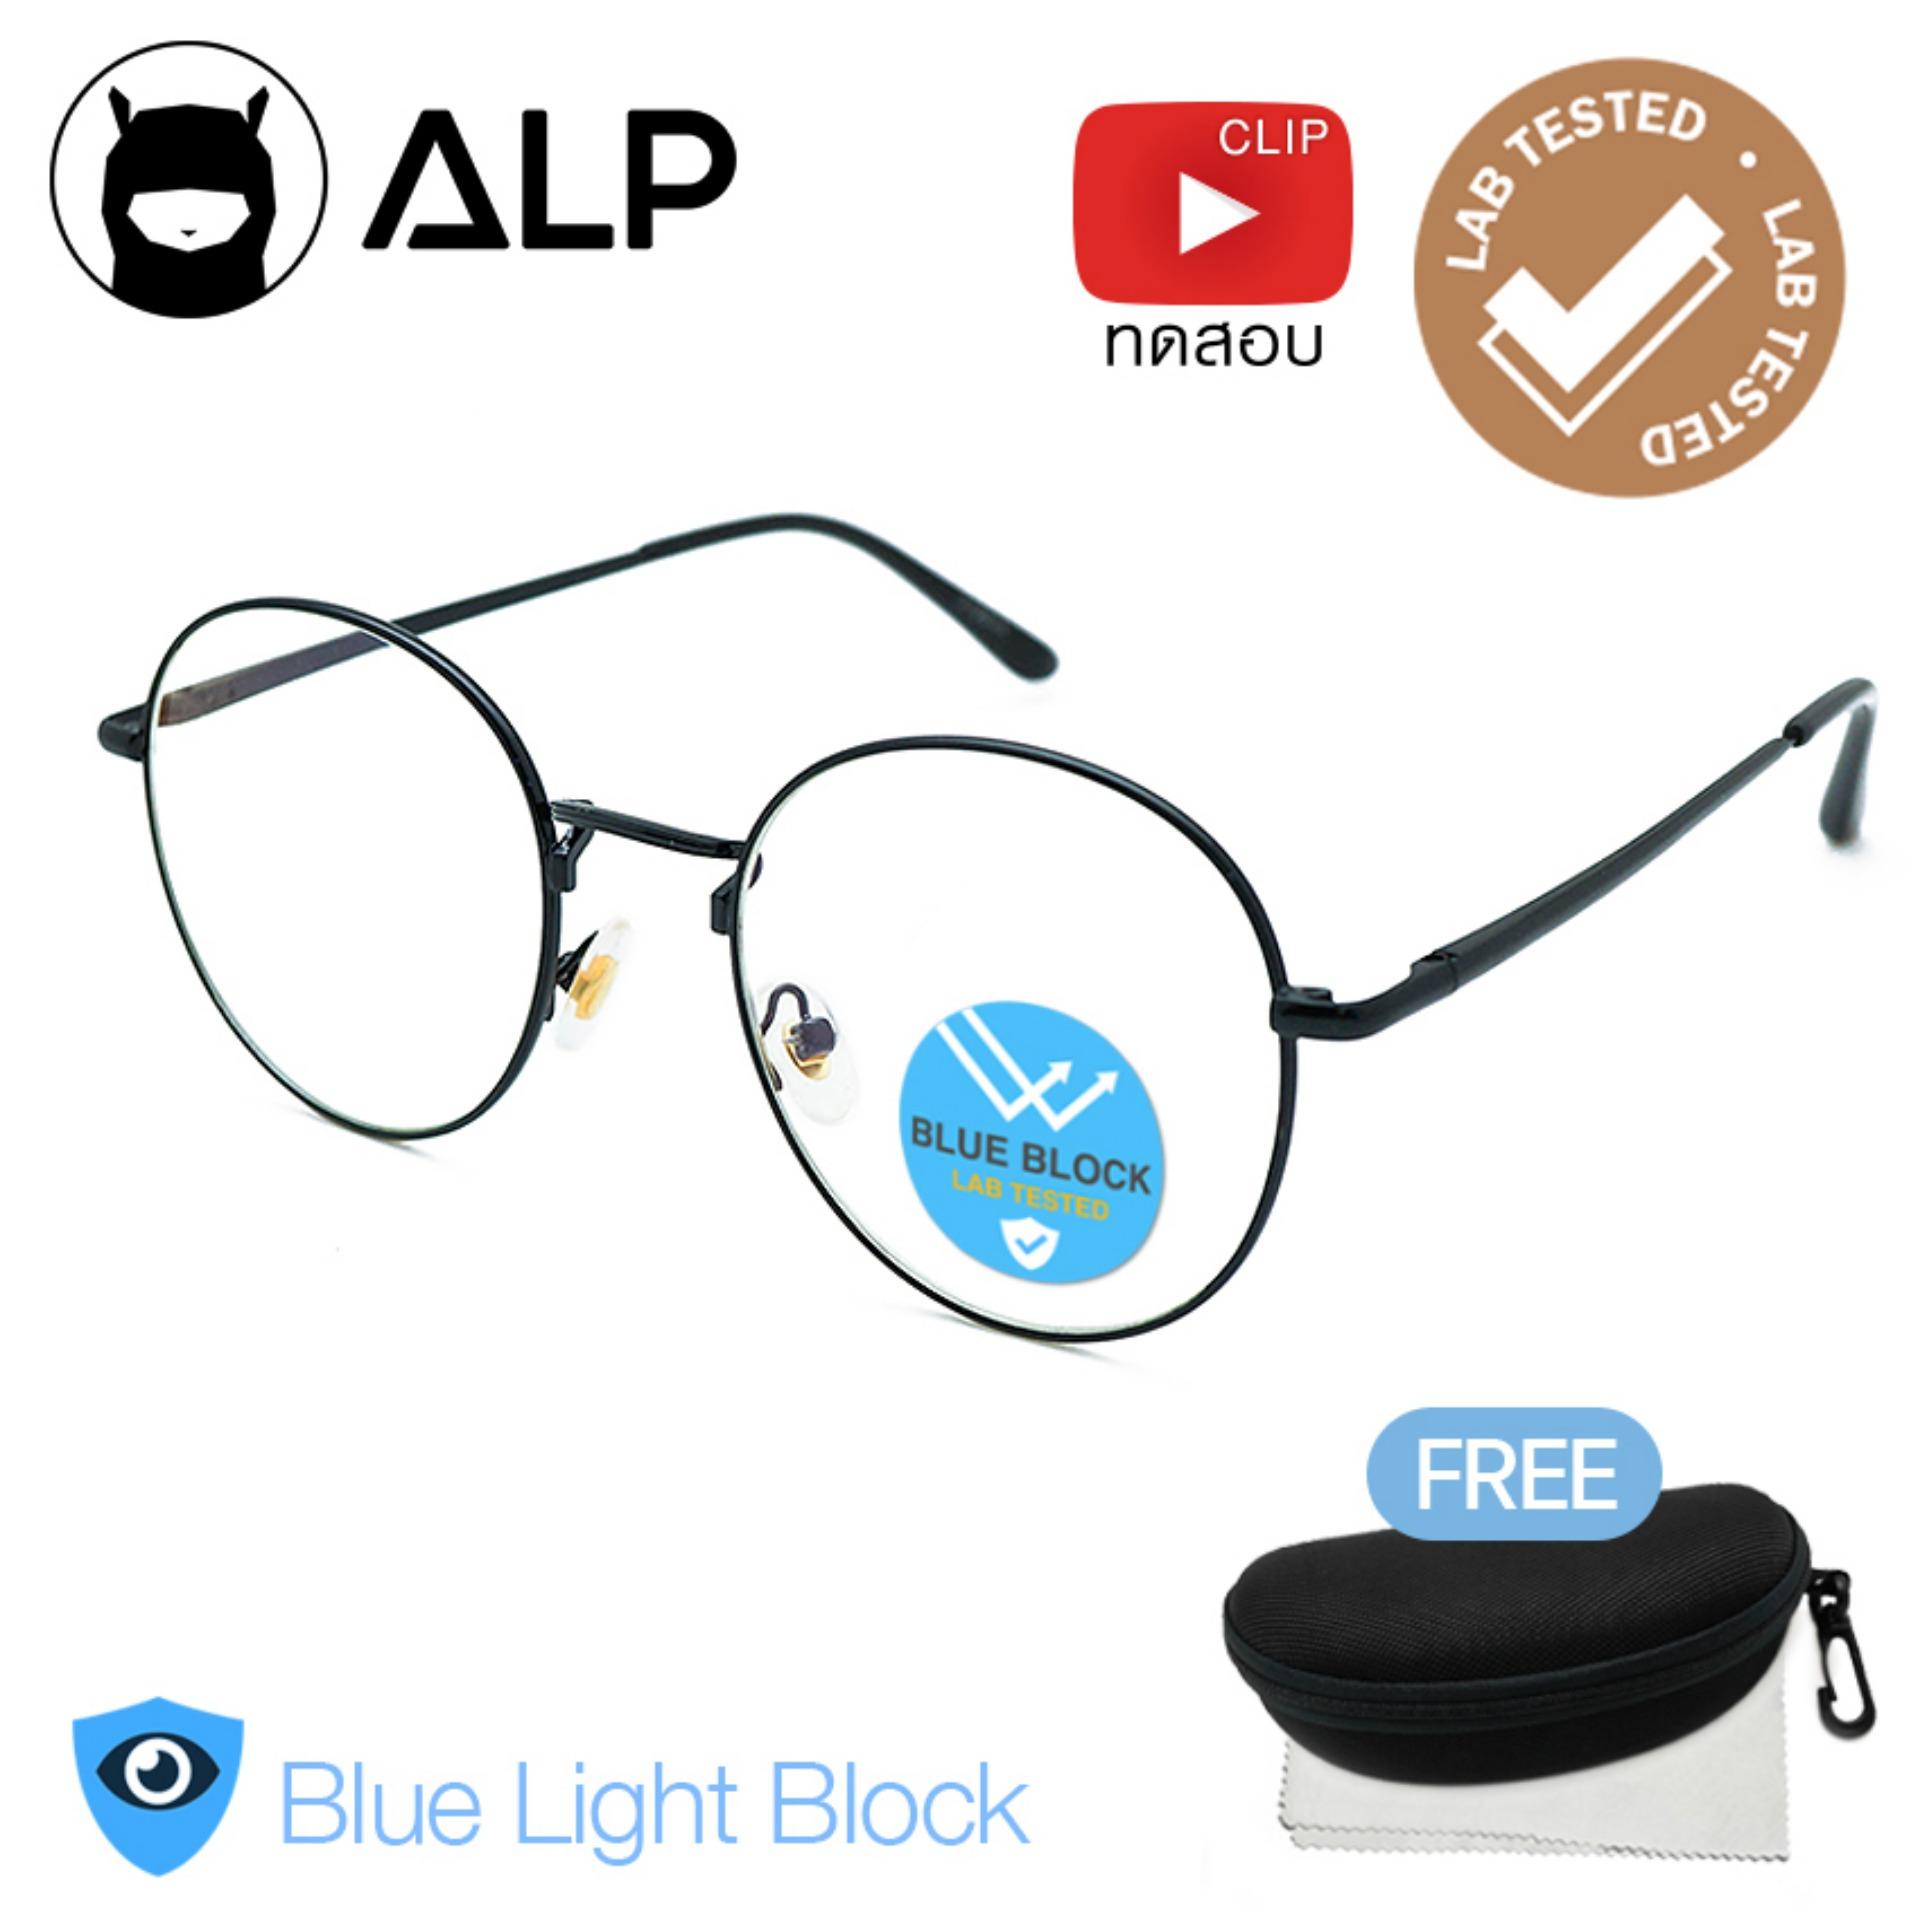 ALP Computer Glasses แว่นกรองแสง แว่นคอมพิวเตอร์ กรองแสงสีฟ้า Blue Light Block  กันรังสี UV, UVA, UVB กรอบแว่นตา Round Style รุ่น ALP-E032